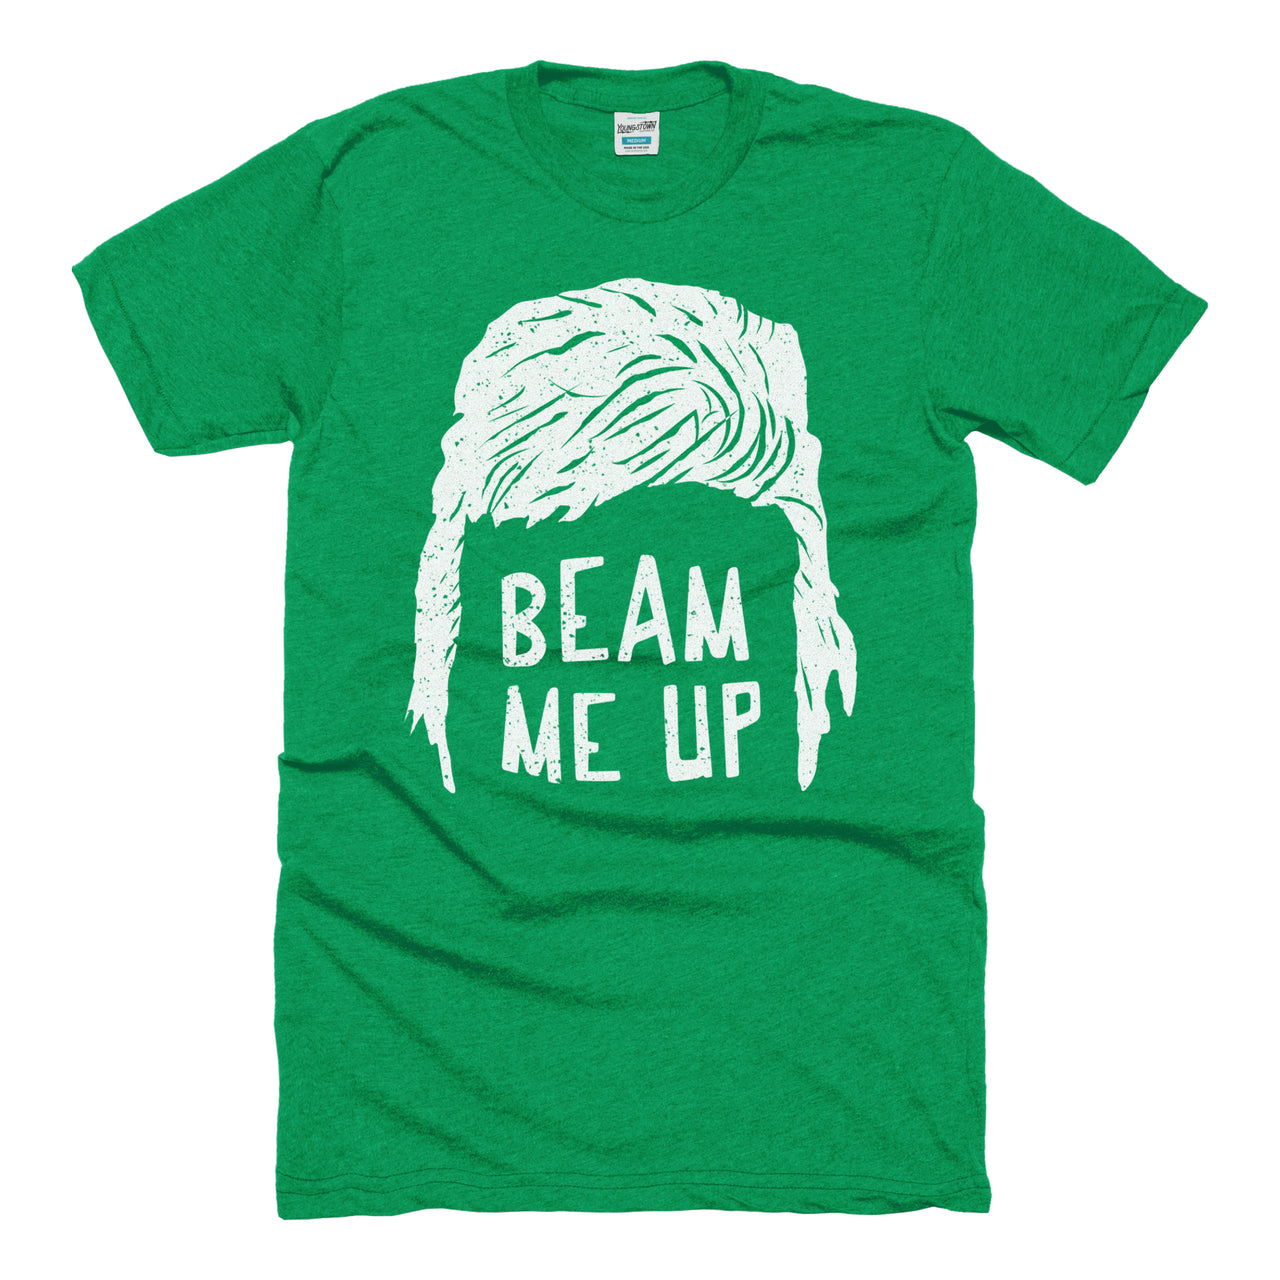 Jim Traficant Beam Me Up T-Shirt